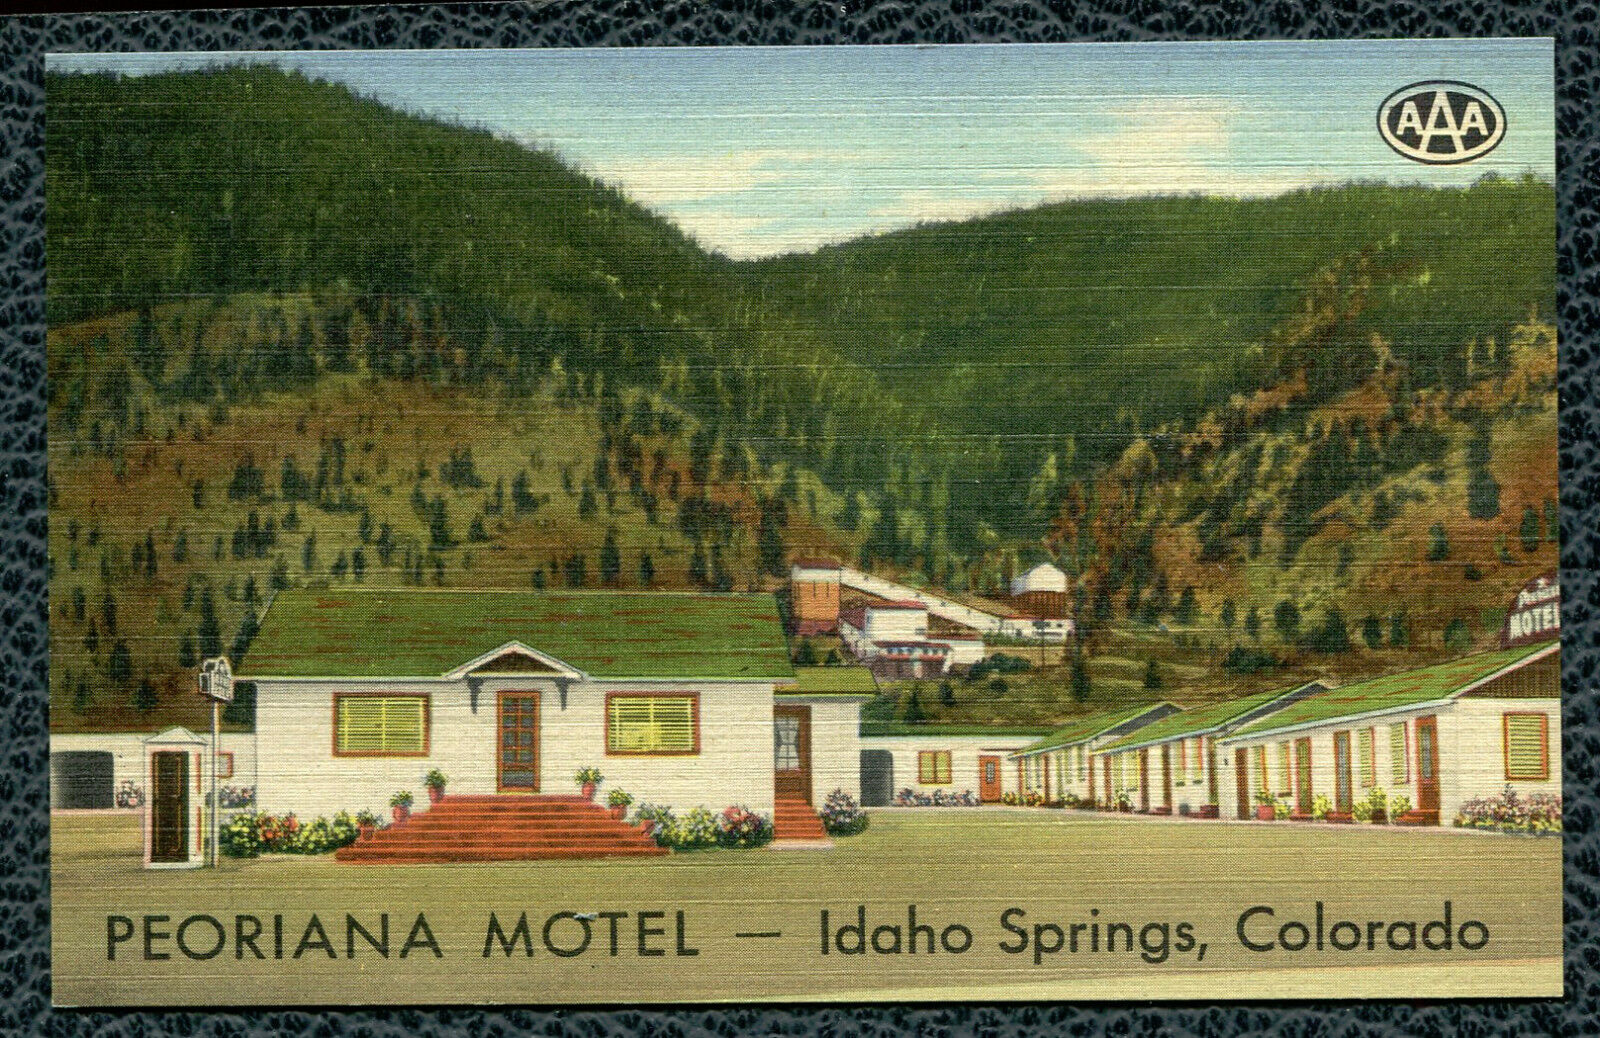 Peoriana Motel Idaho Springs Colorado co Triple AAA linen postcard